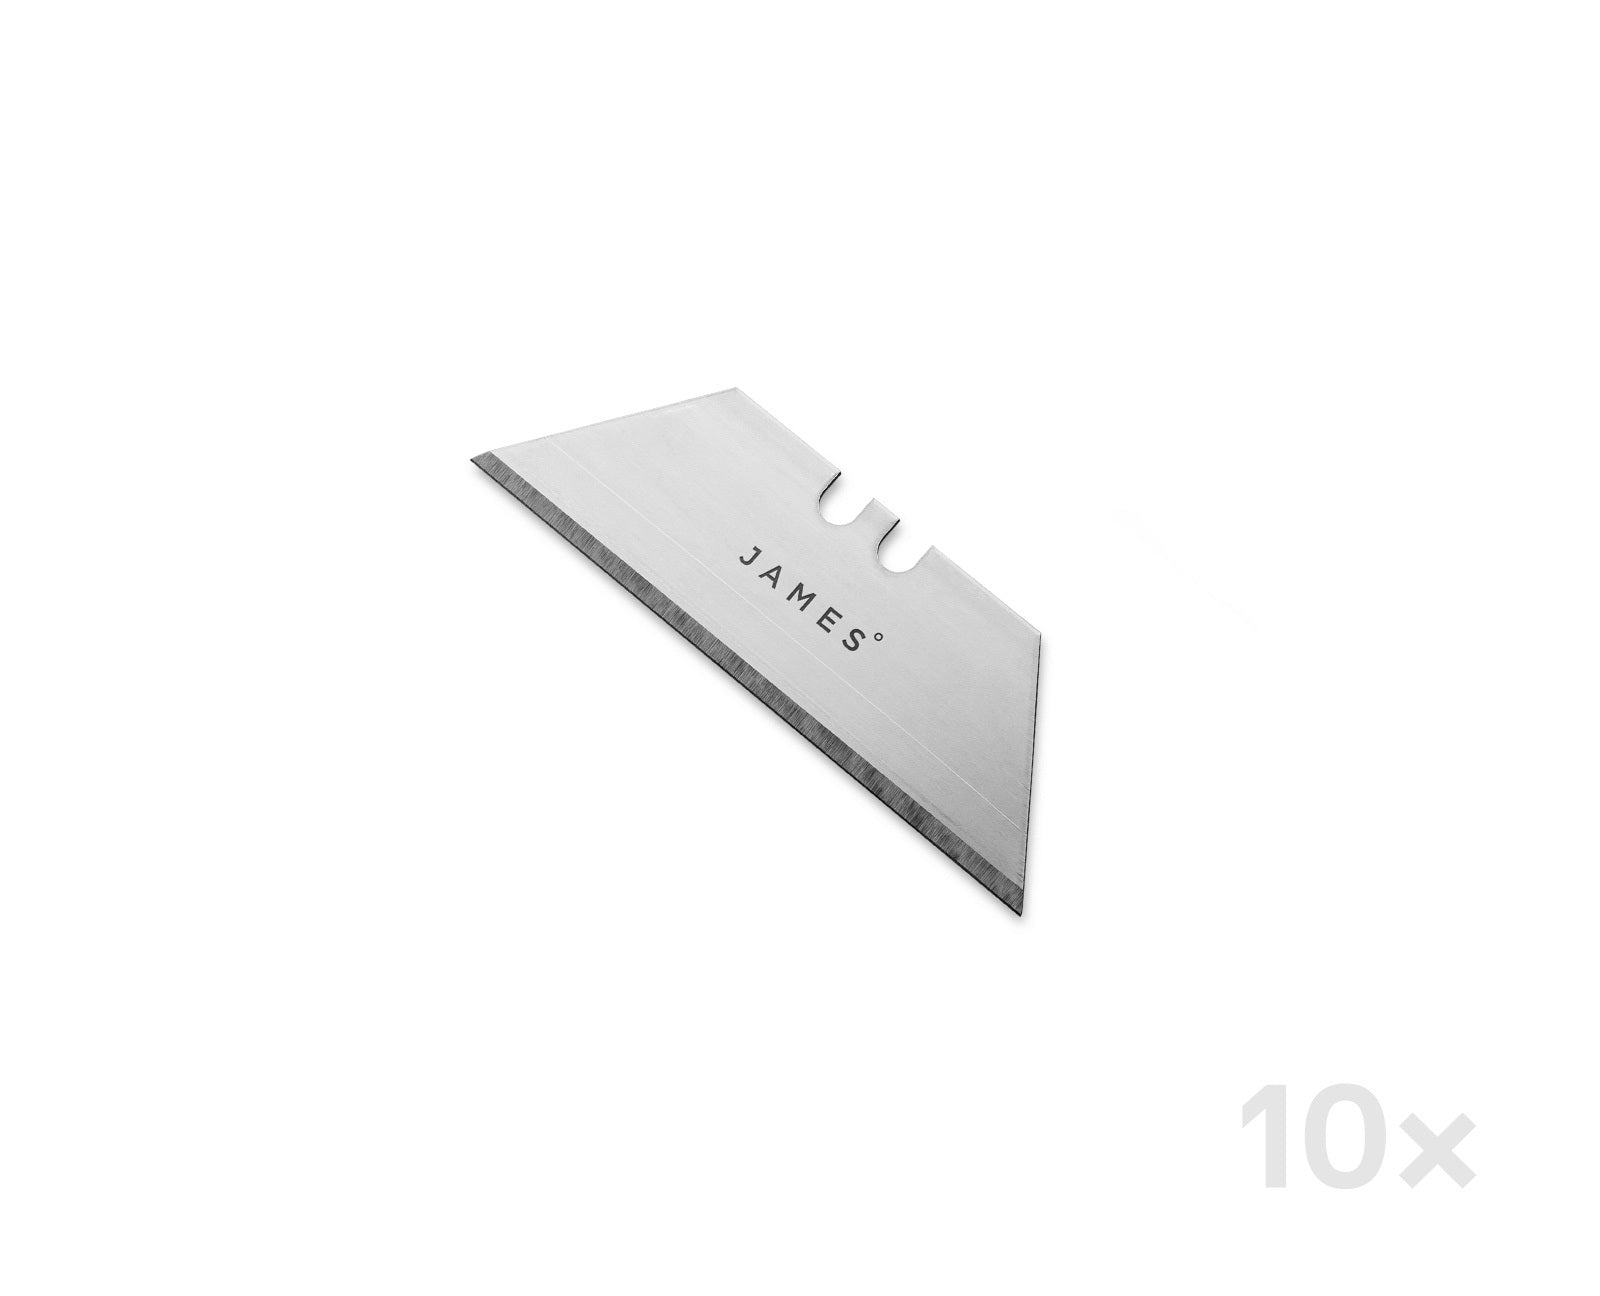 Jiffy Box Cutter, Uses Single Edge Razor Blades As Refills - Columbia Omni  Studio